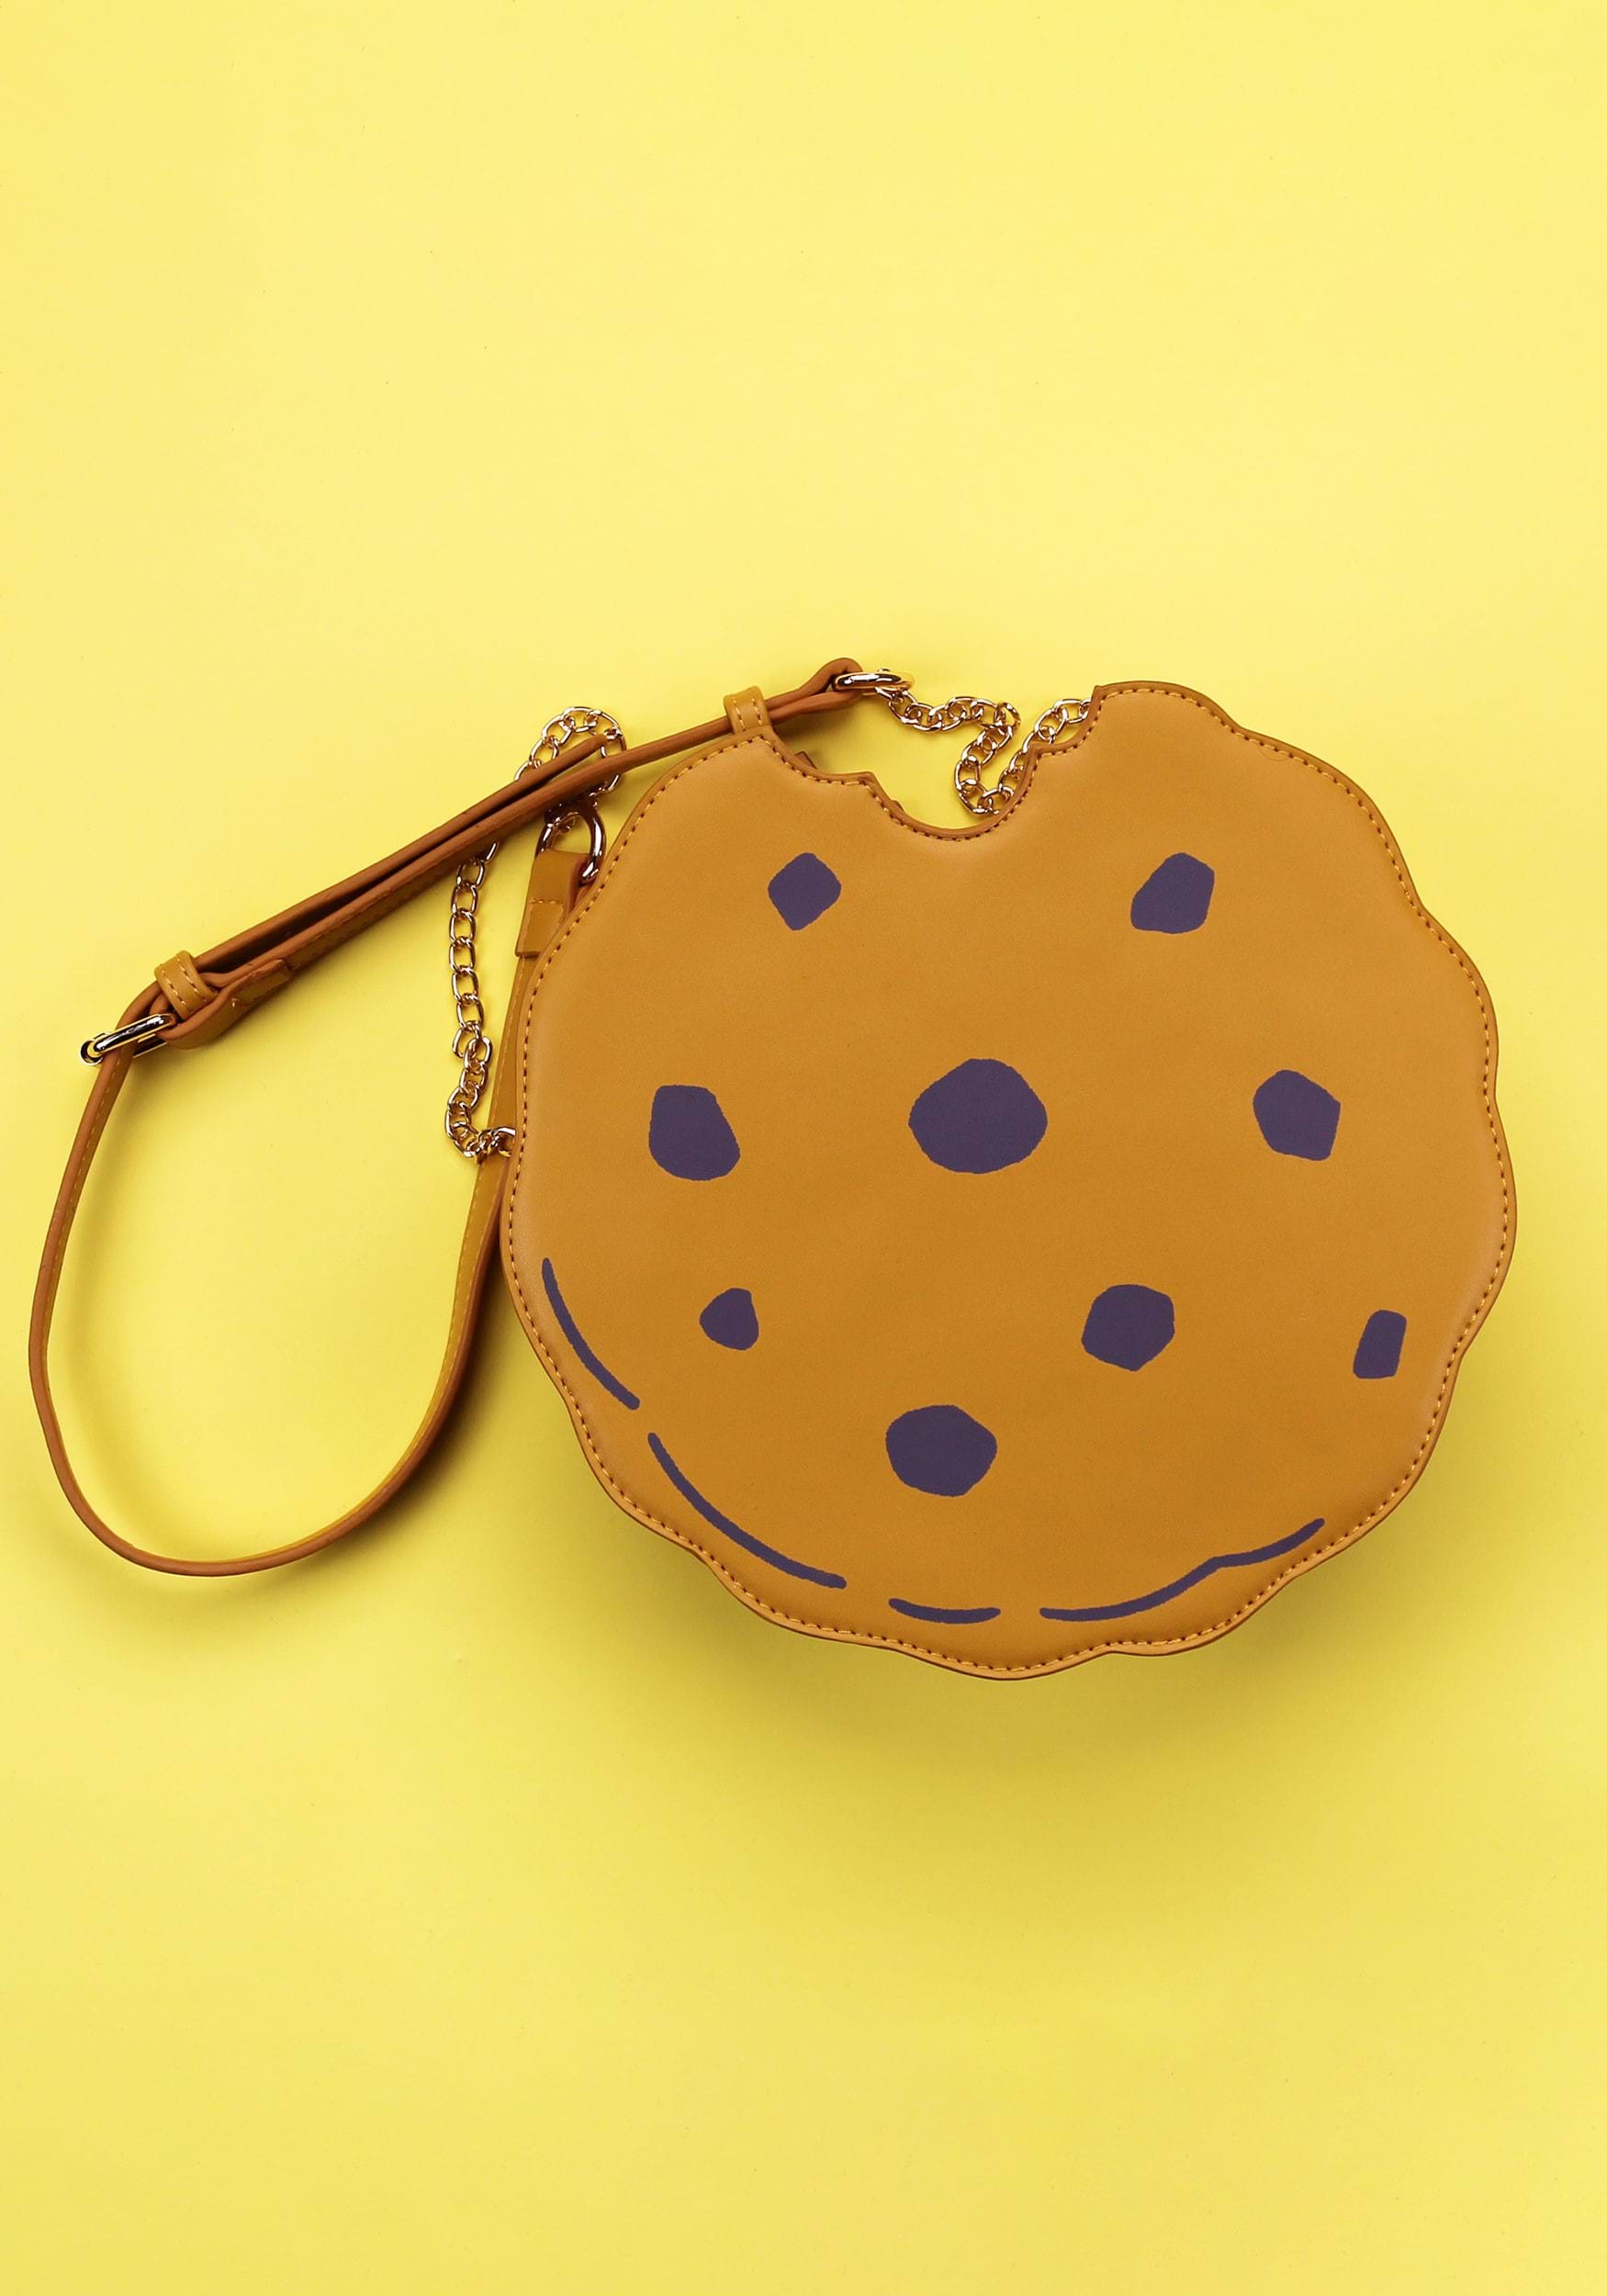 cookie crossbody purse